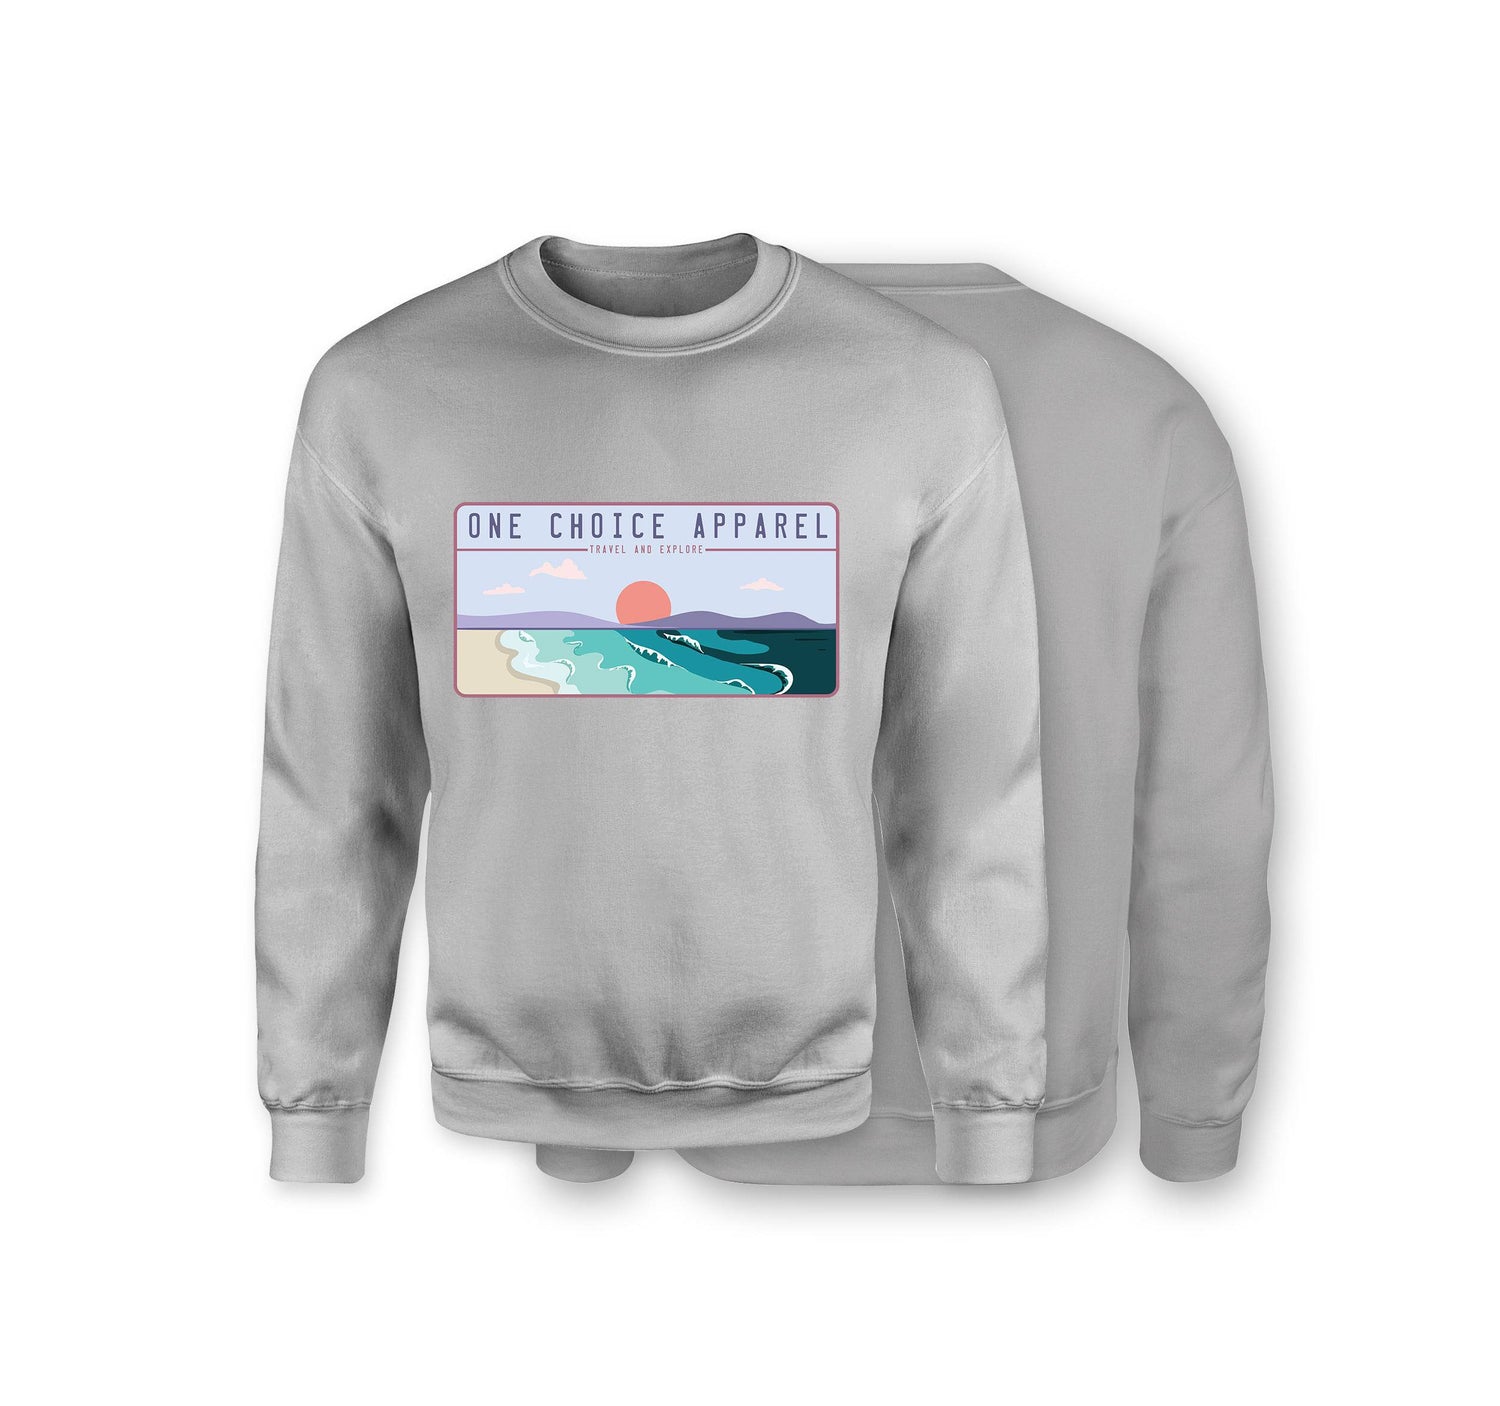 Beach Scene Sweatshirt - Organic Cotton Sweatshirt - Front Print - One Choice Apparel